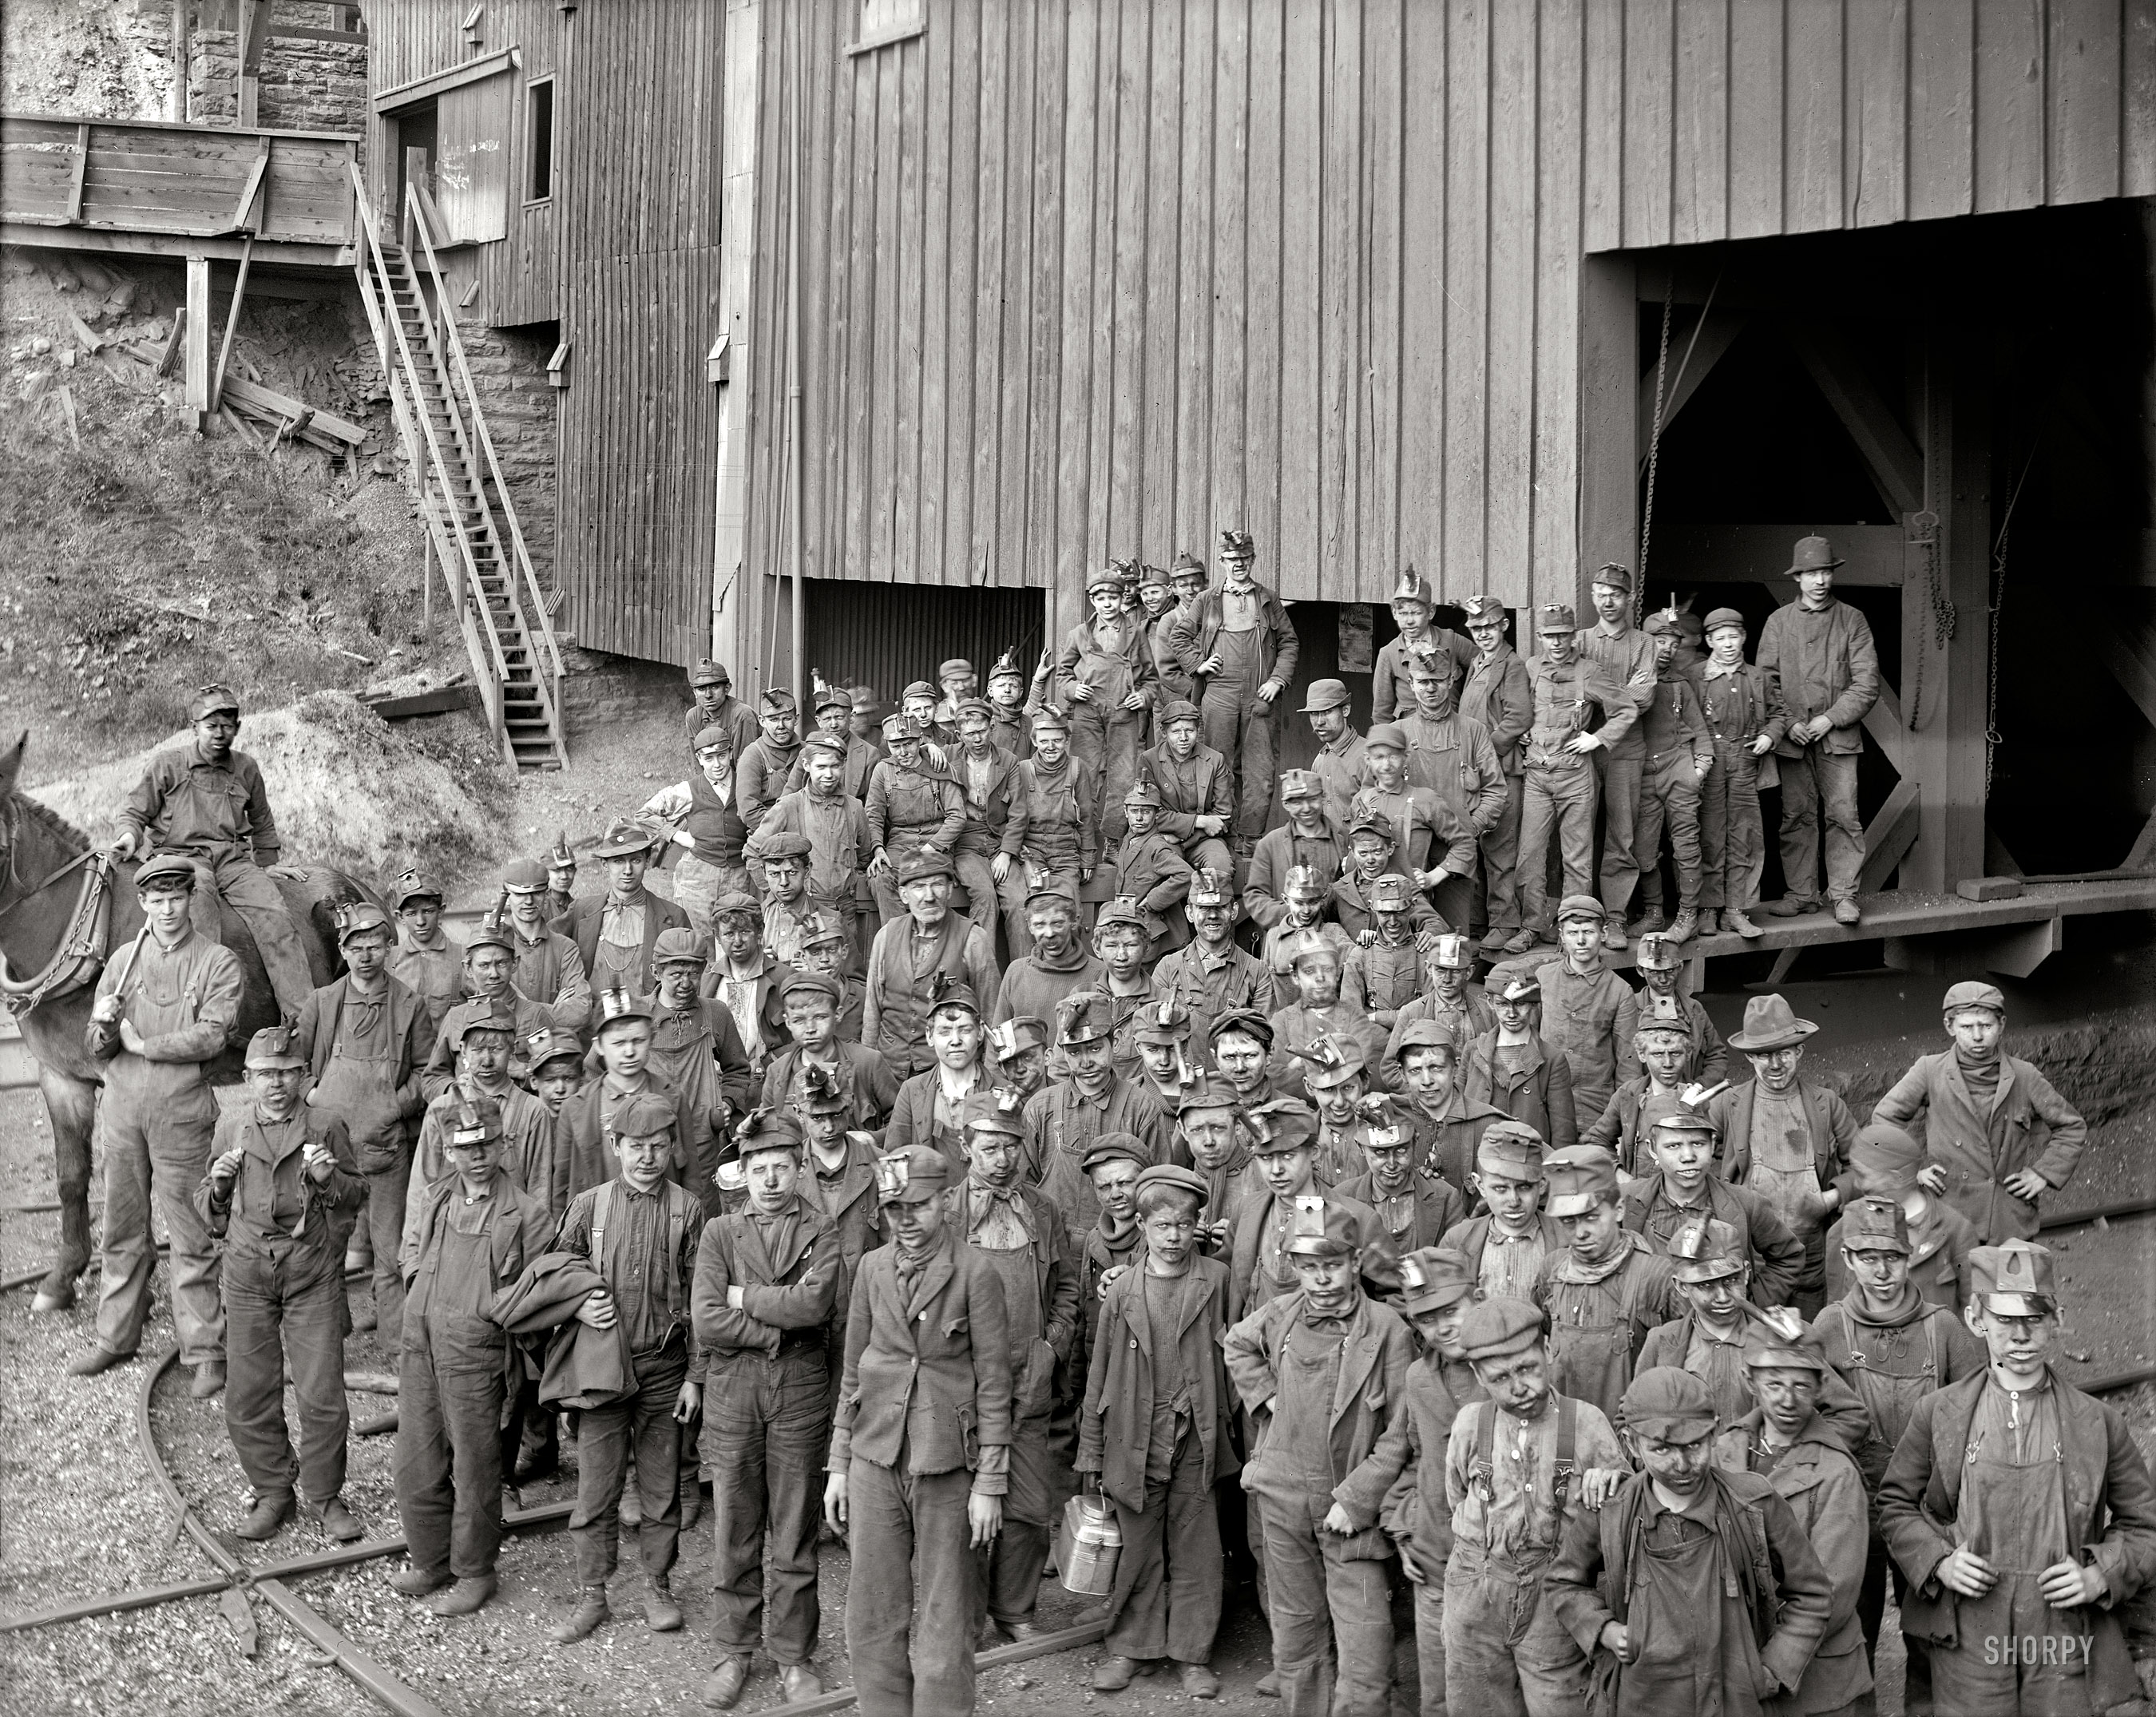 Kingston, Pennsylvania, circa 1900. "Breaker boys at Woodward coal breaker." 8x10 inch dry plate glass negative, Detroit Publishing Company. View full size.